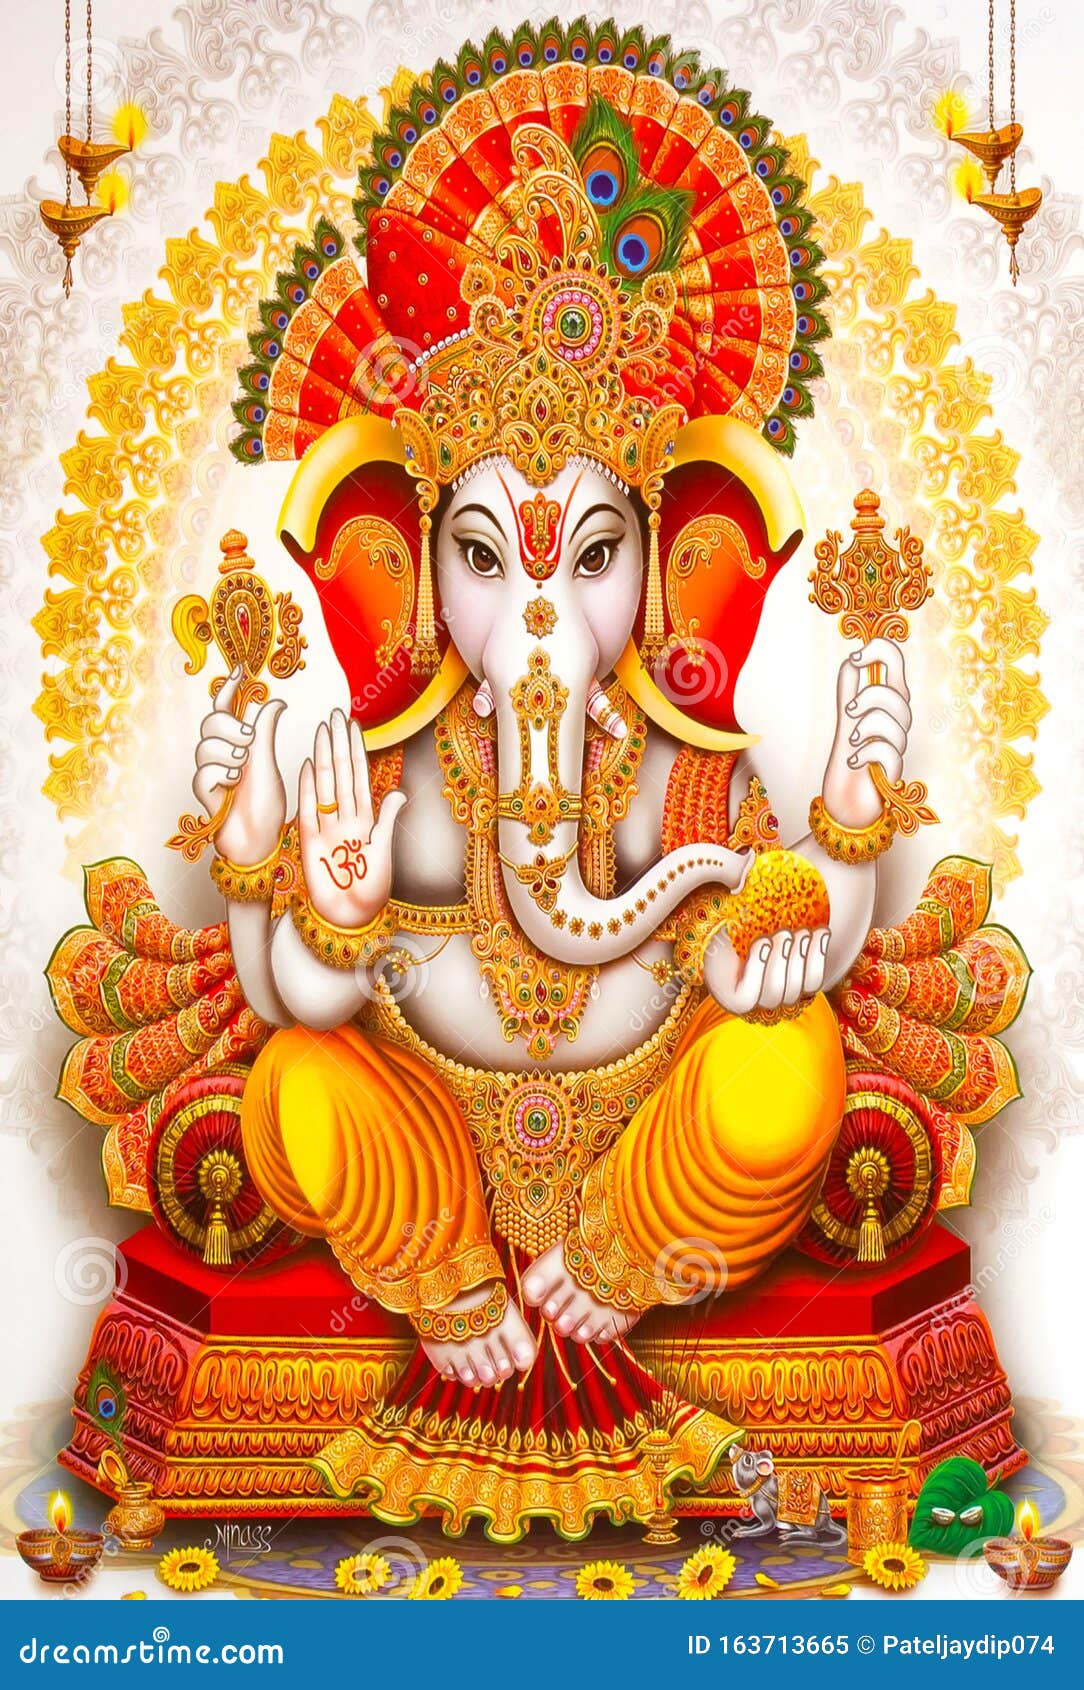 Hindu Lord Ganesha Texture Wallpaper Background Stock Image ...